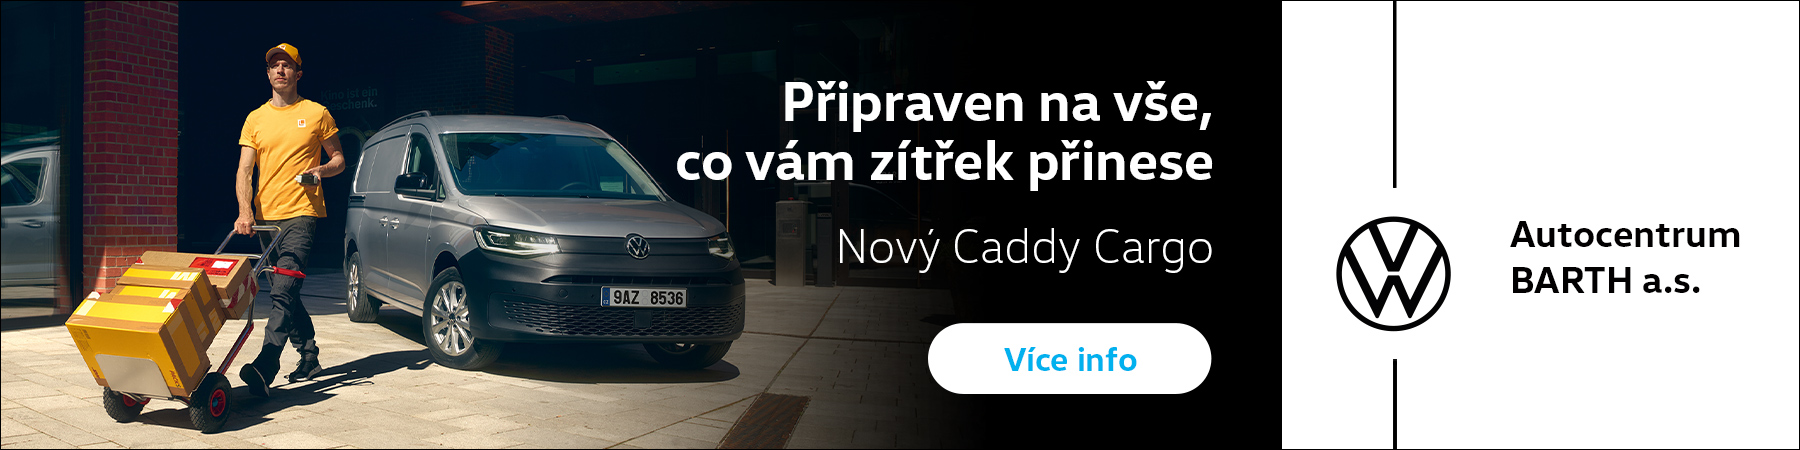 Nový Caddy Cargo